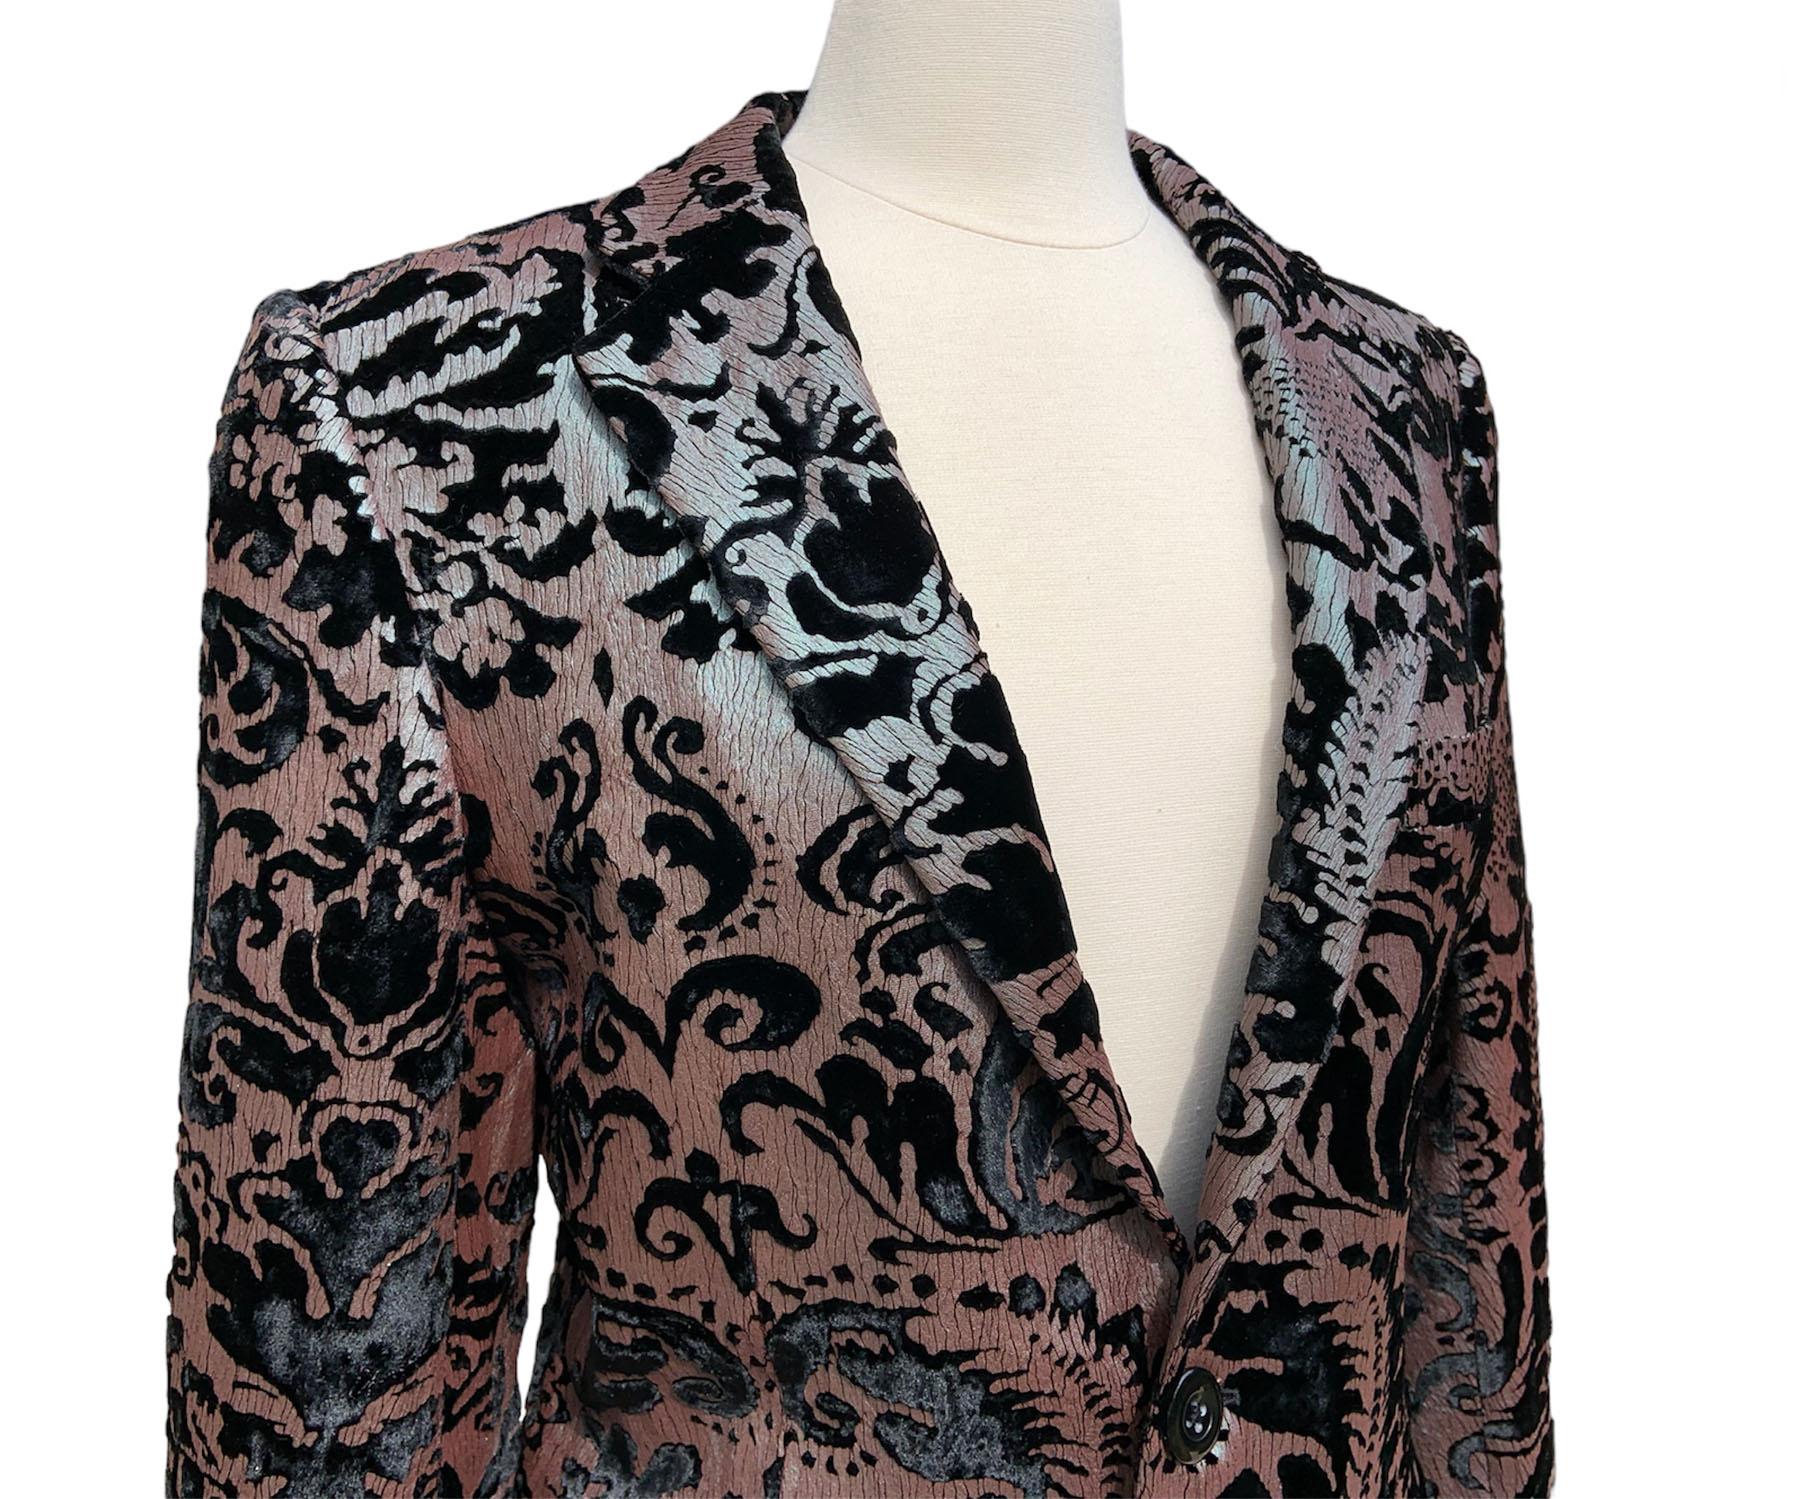 Tom Ford for Gucci SS 2000 Gothic Damask Iridescent Paint Velvet Blazer 48 US 38 For Sale 3